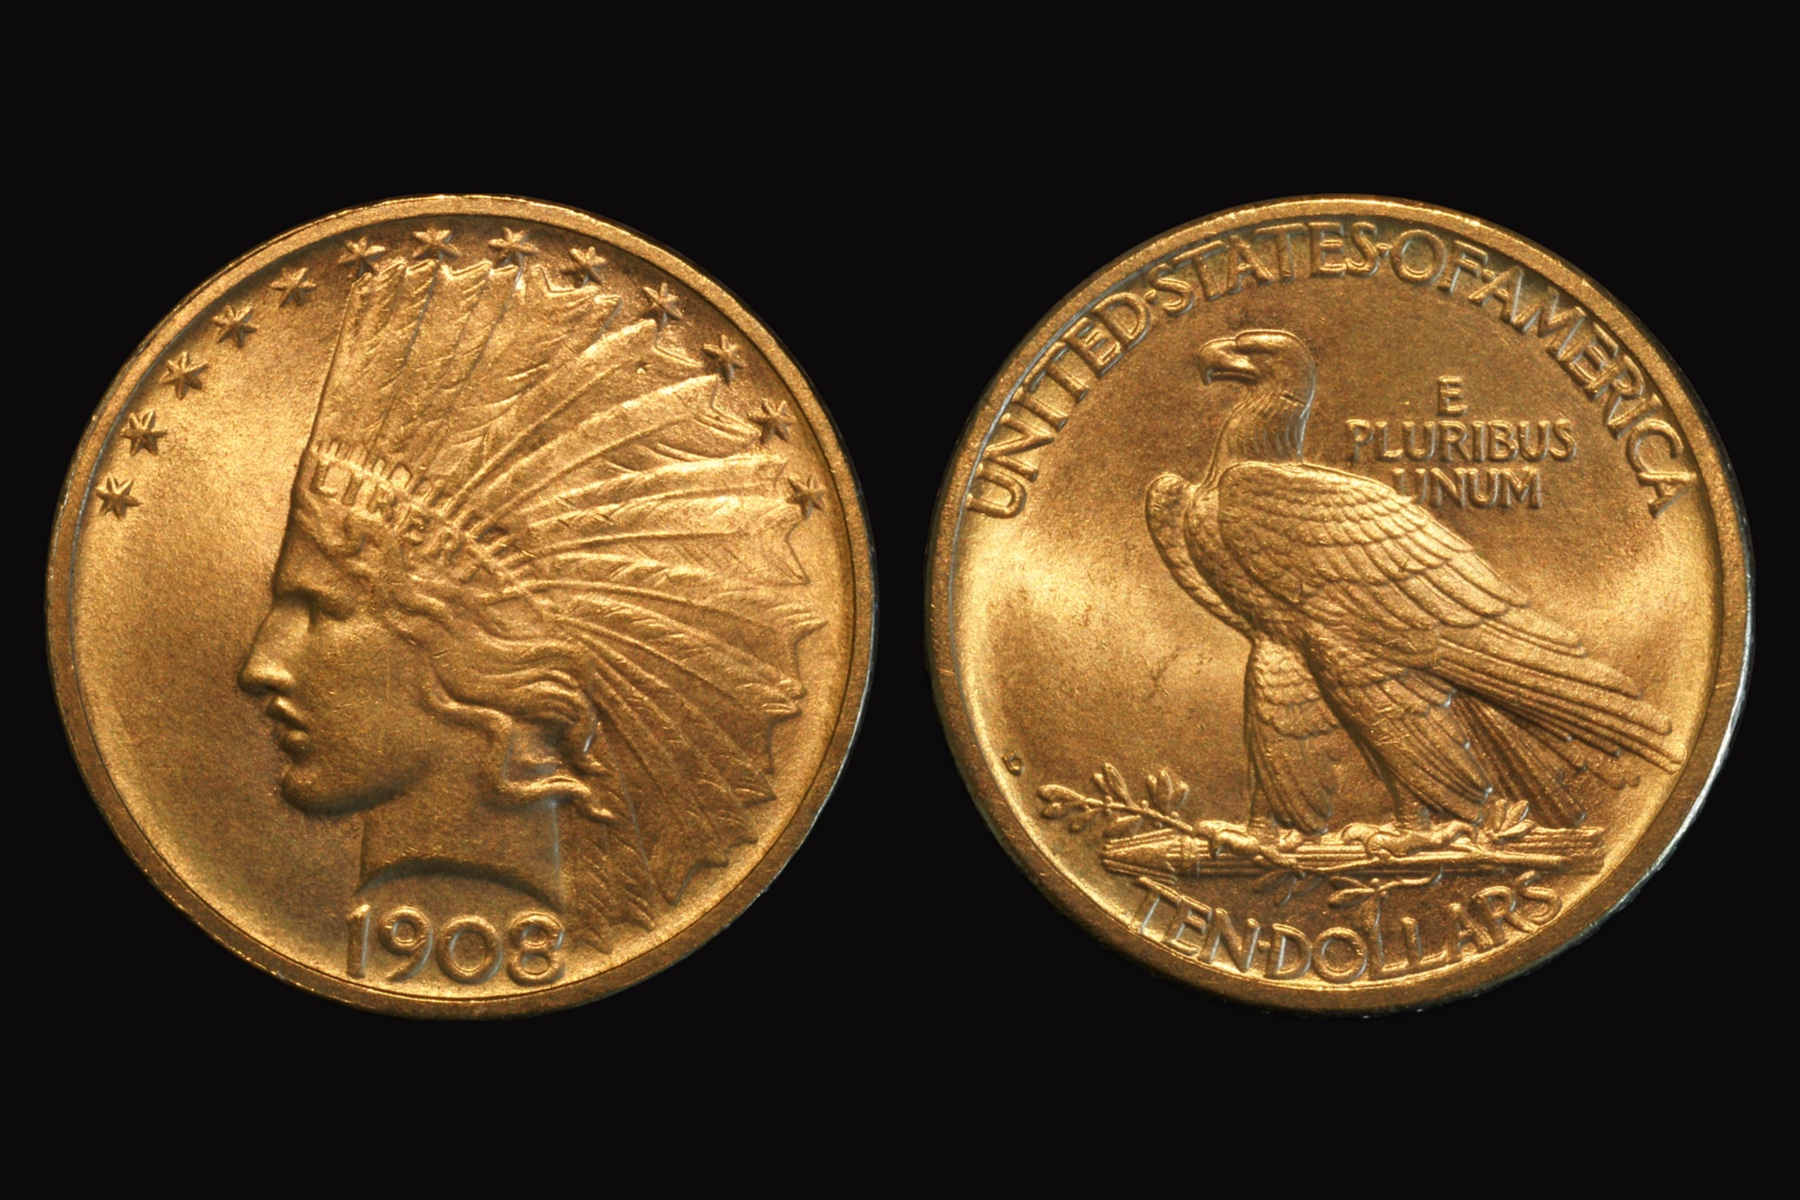 USA 1908 D 10 Dollar.jpg